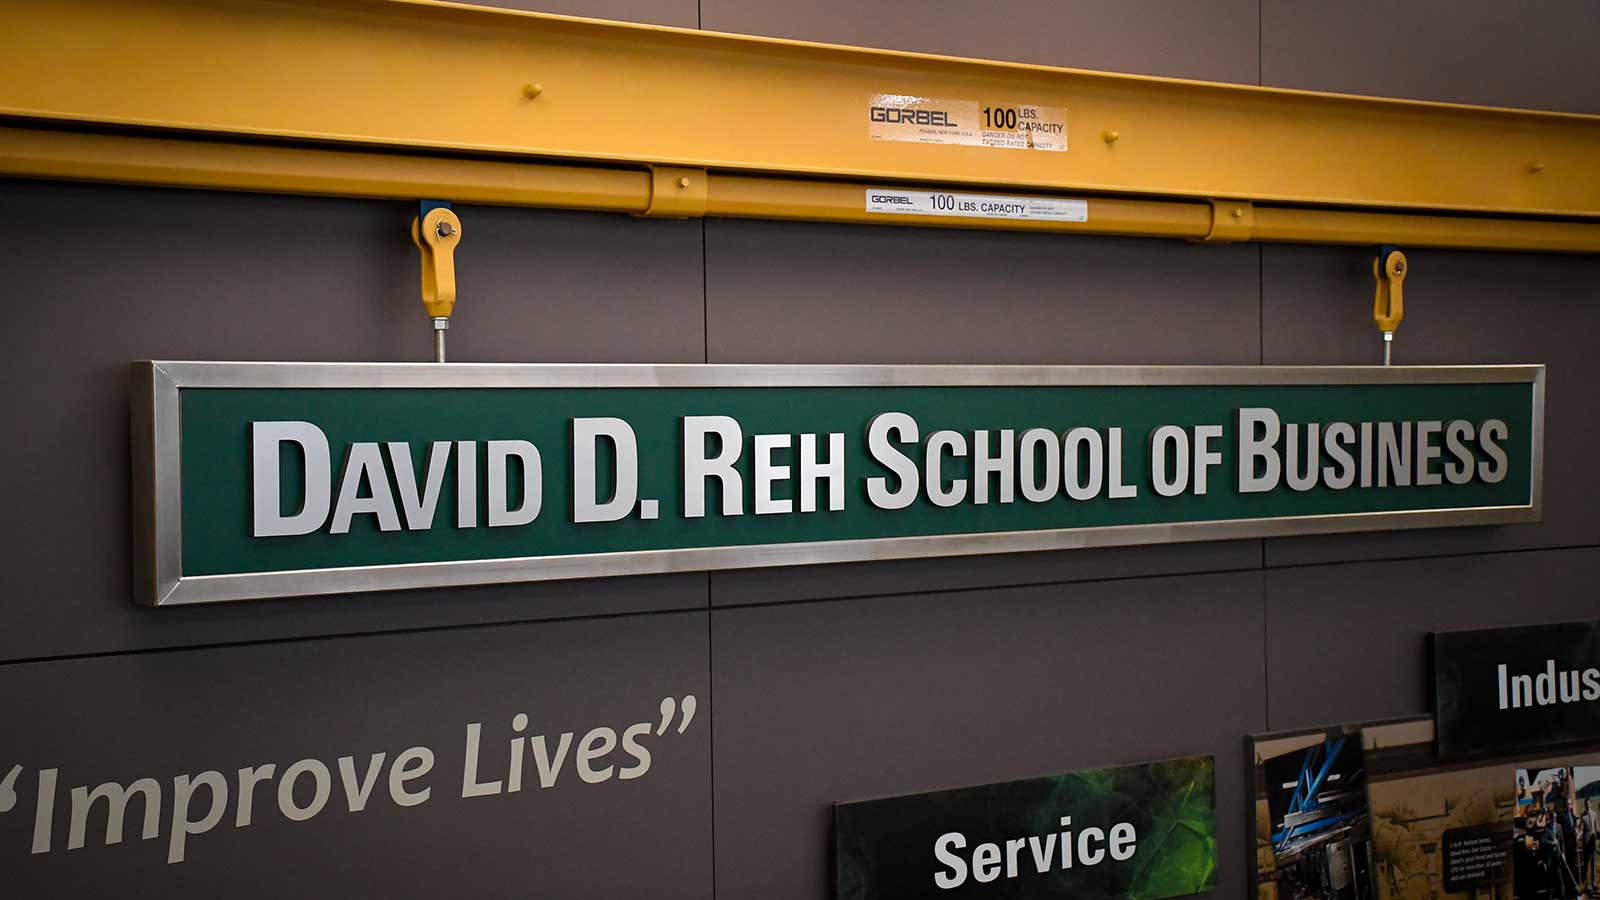 David D. Reh School of Business sign